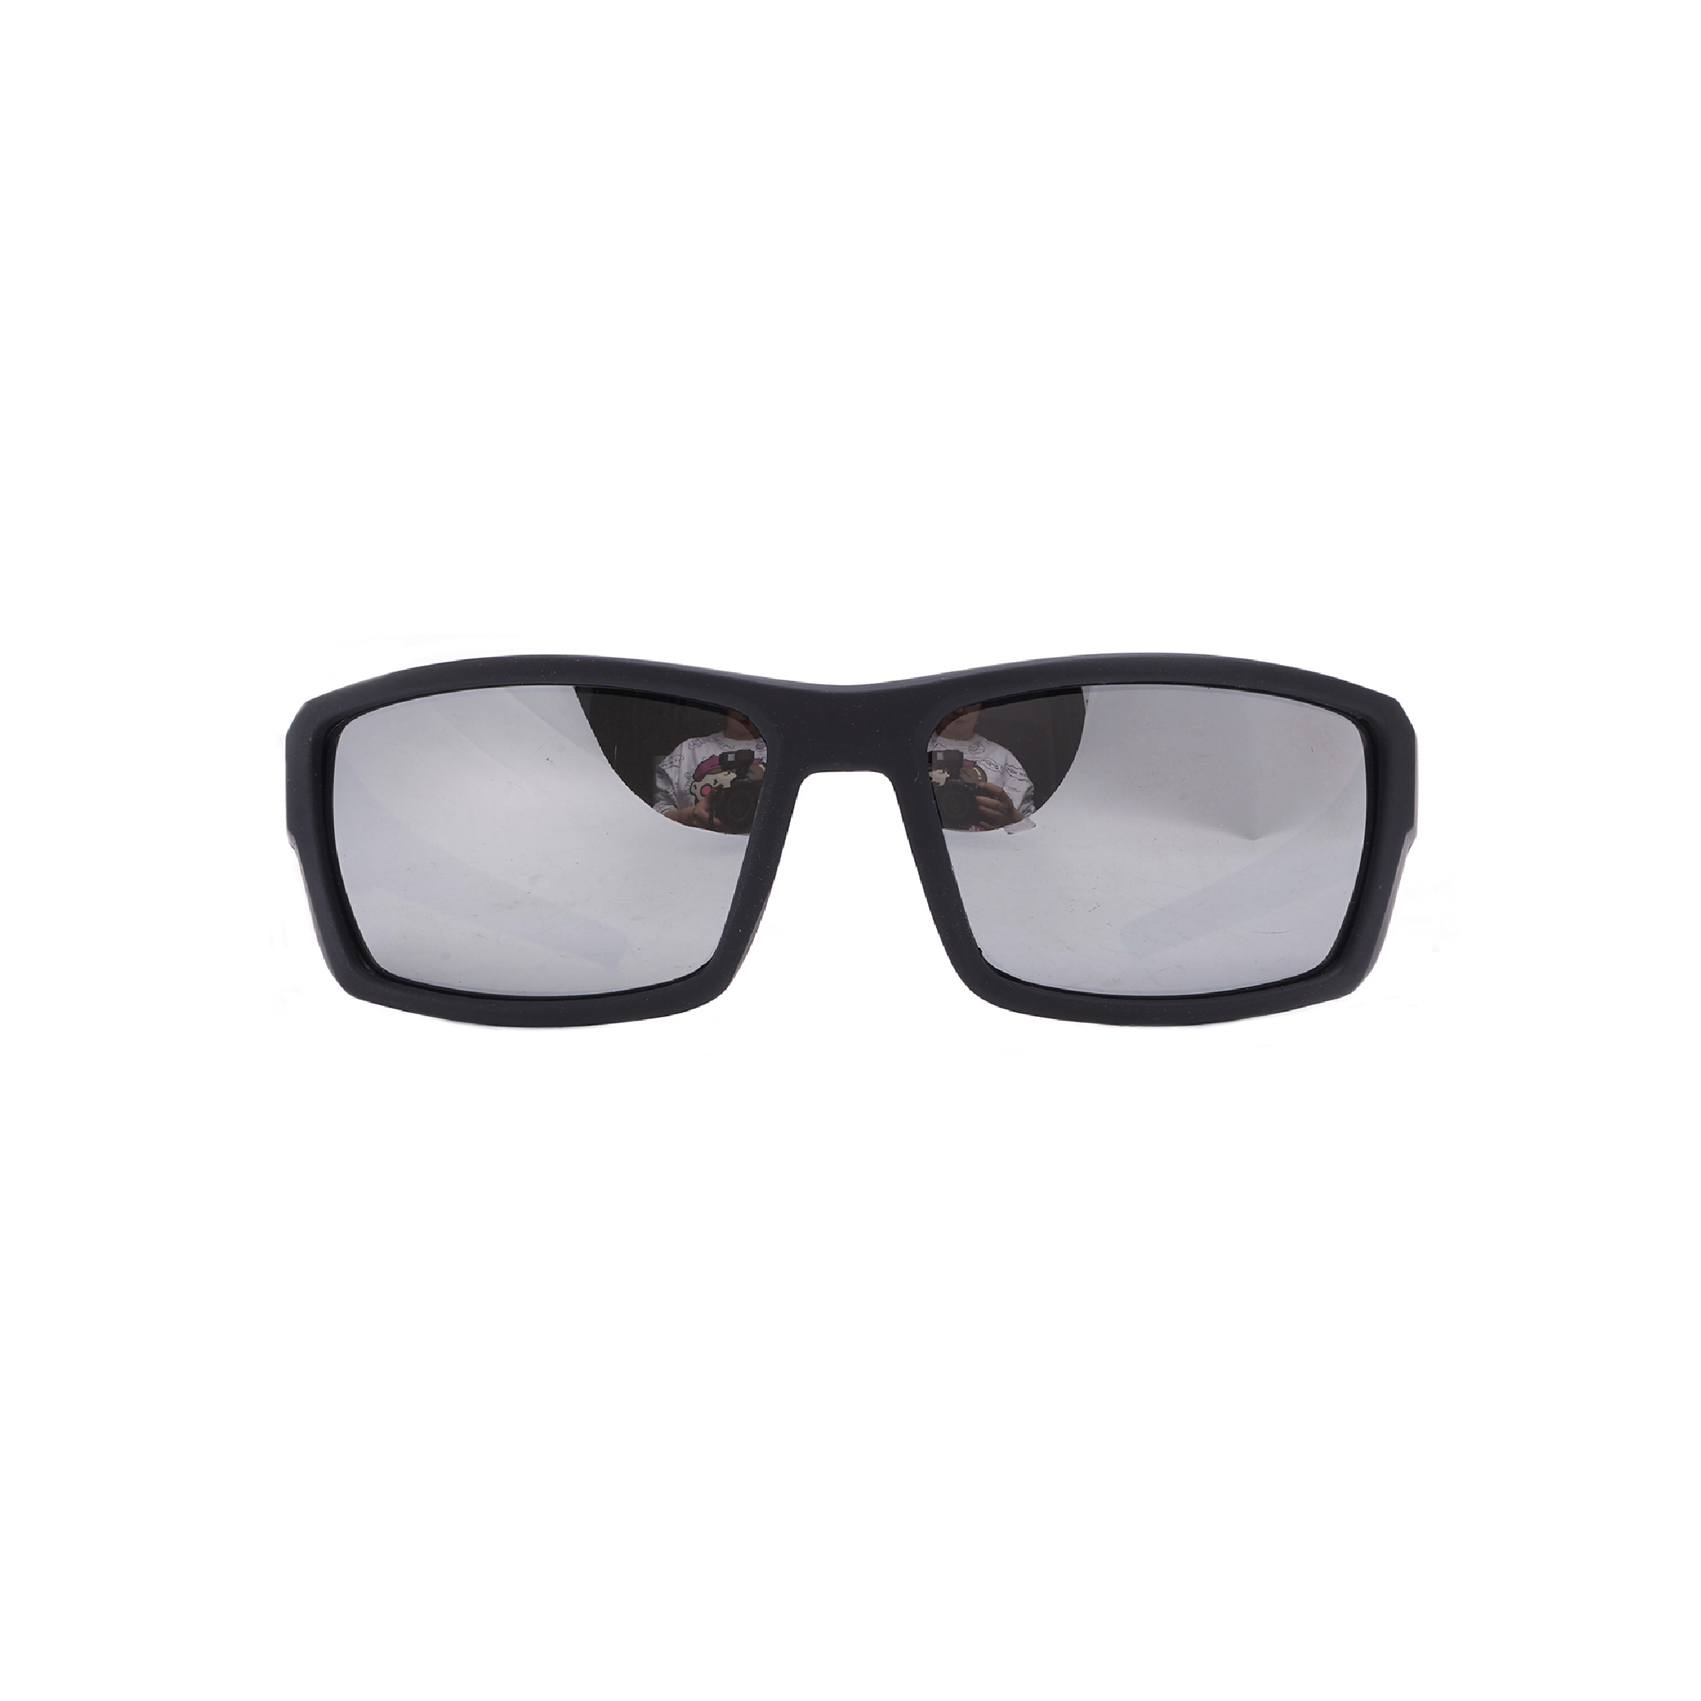 Vintage Black Prescription Sport Sunglasses for Men Sport Outdoor Sunglasses Manufacturer